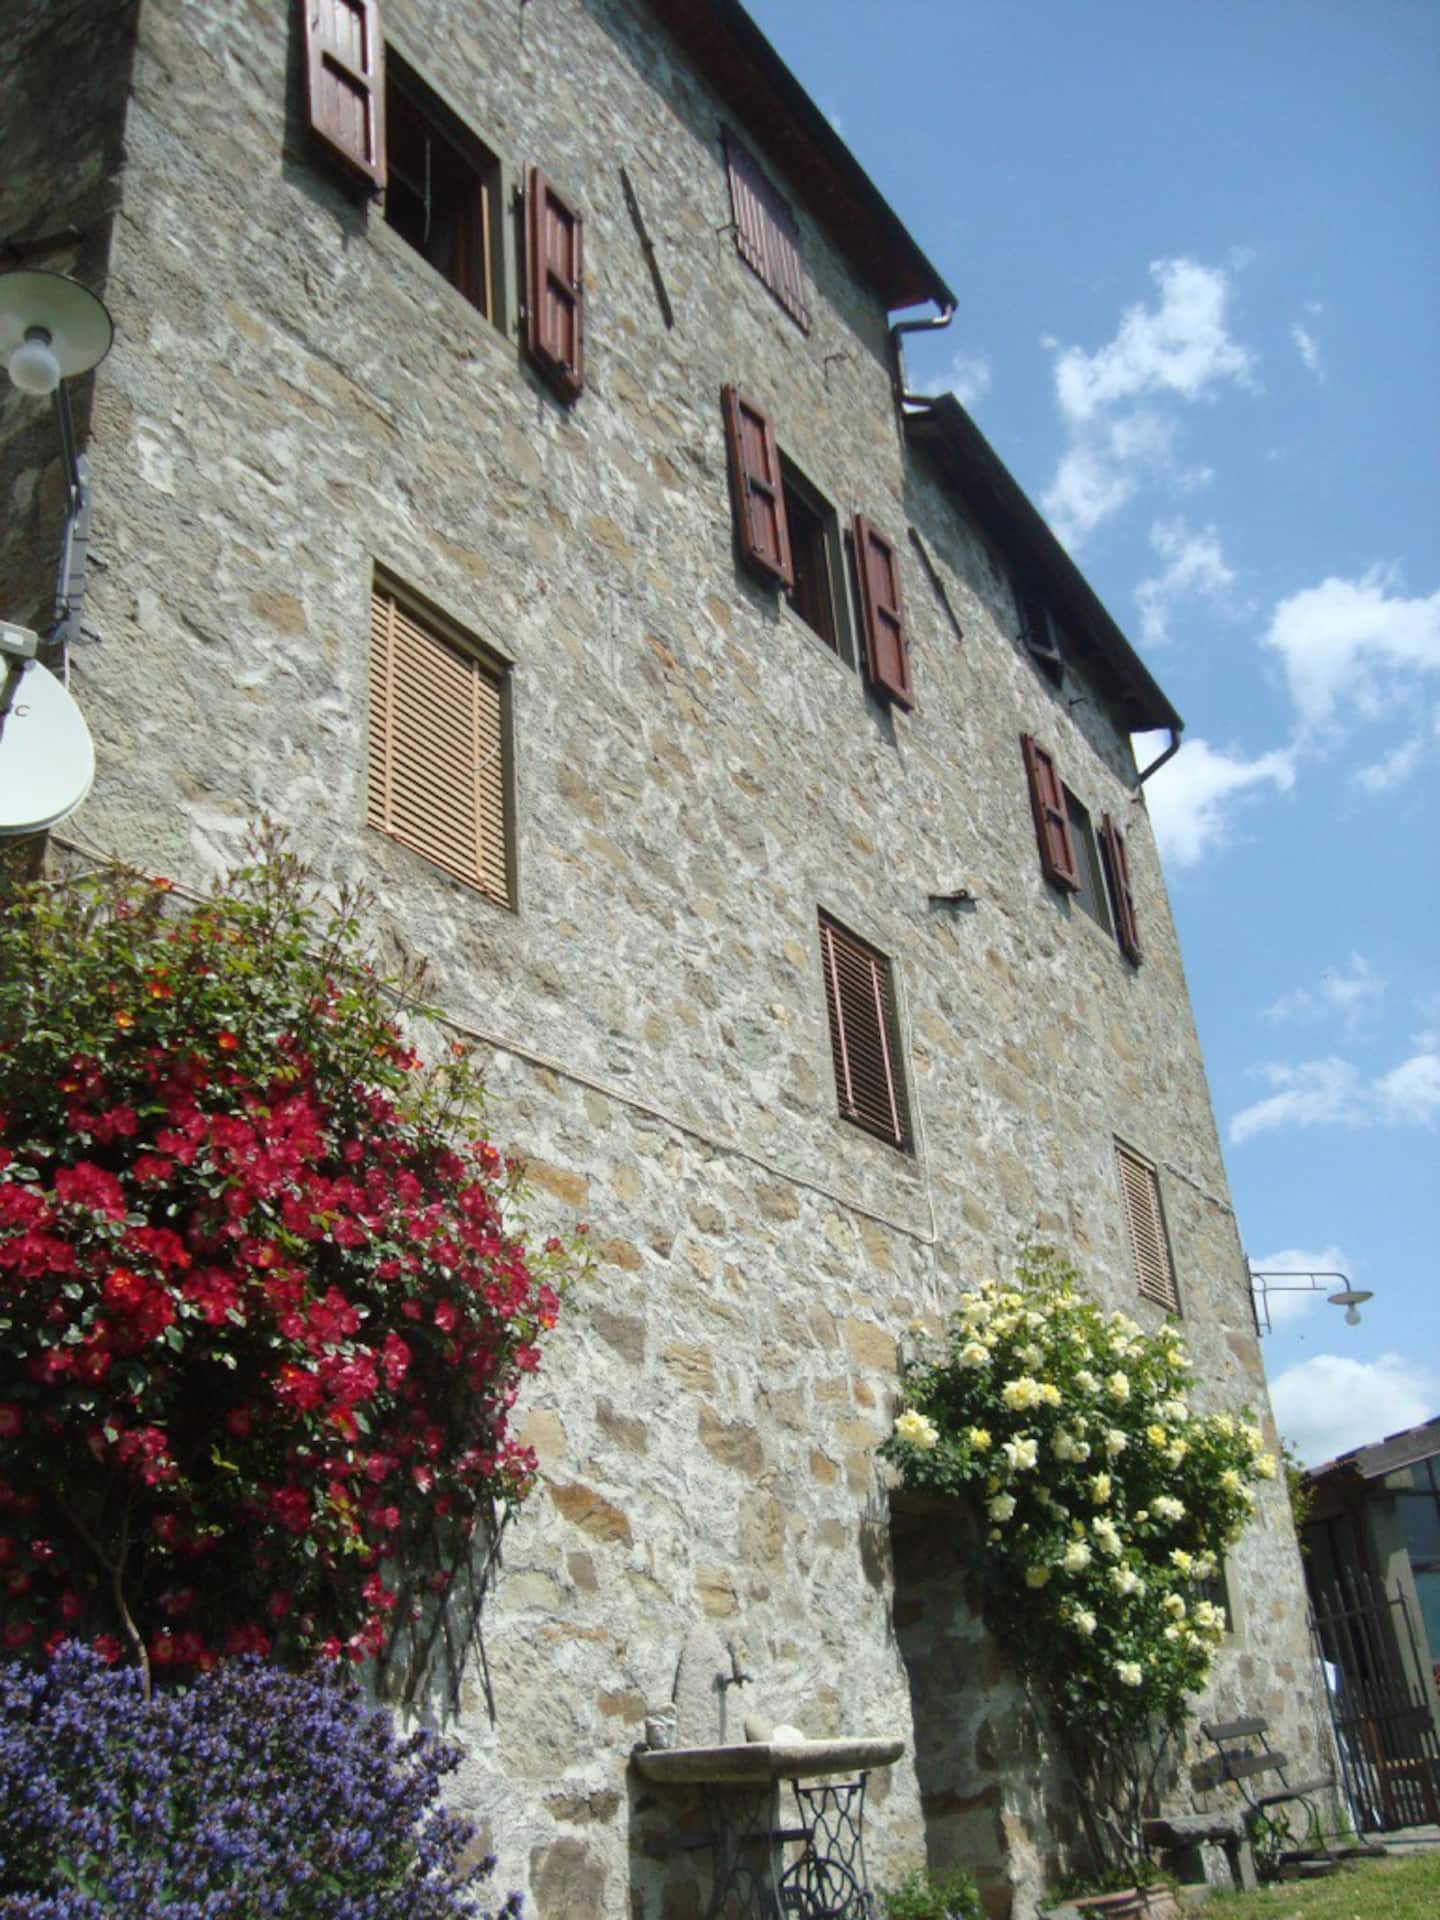 Restored large stone house Bagni di Lucca